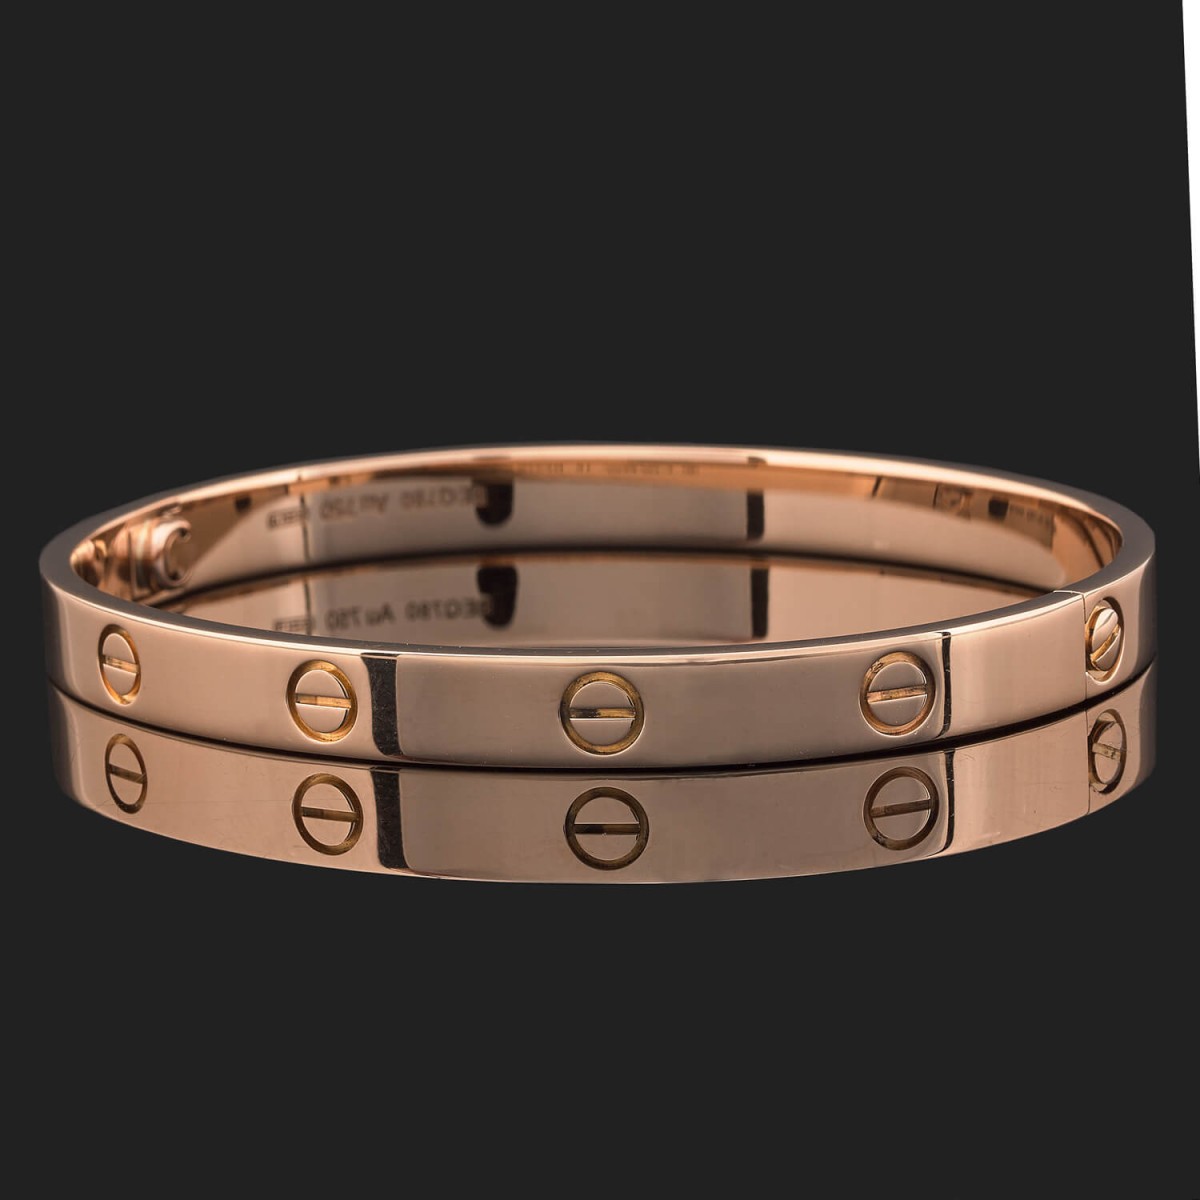 Cartier Love gold bracelet size 17